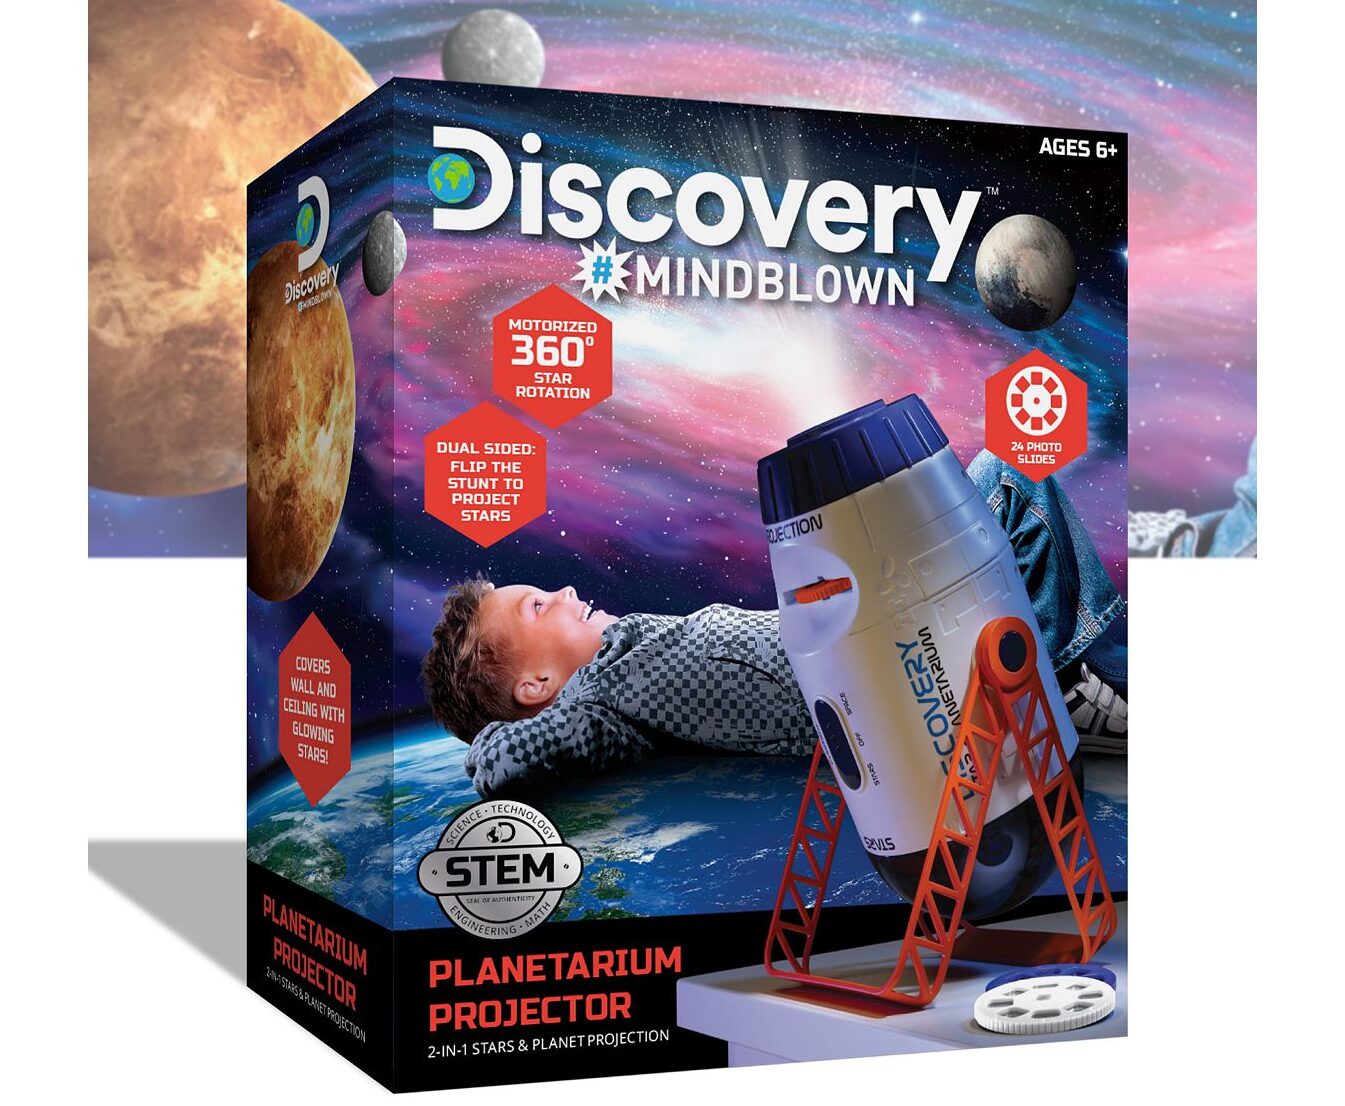 Discovery #Mindblown Planetarium Projector